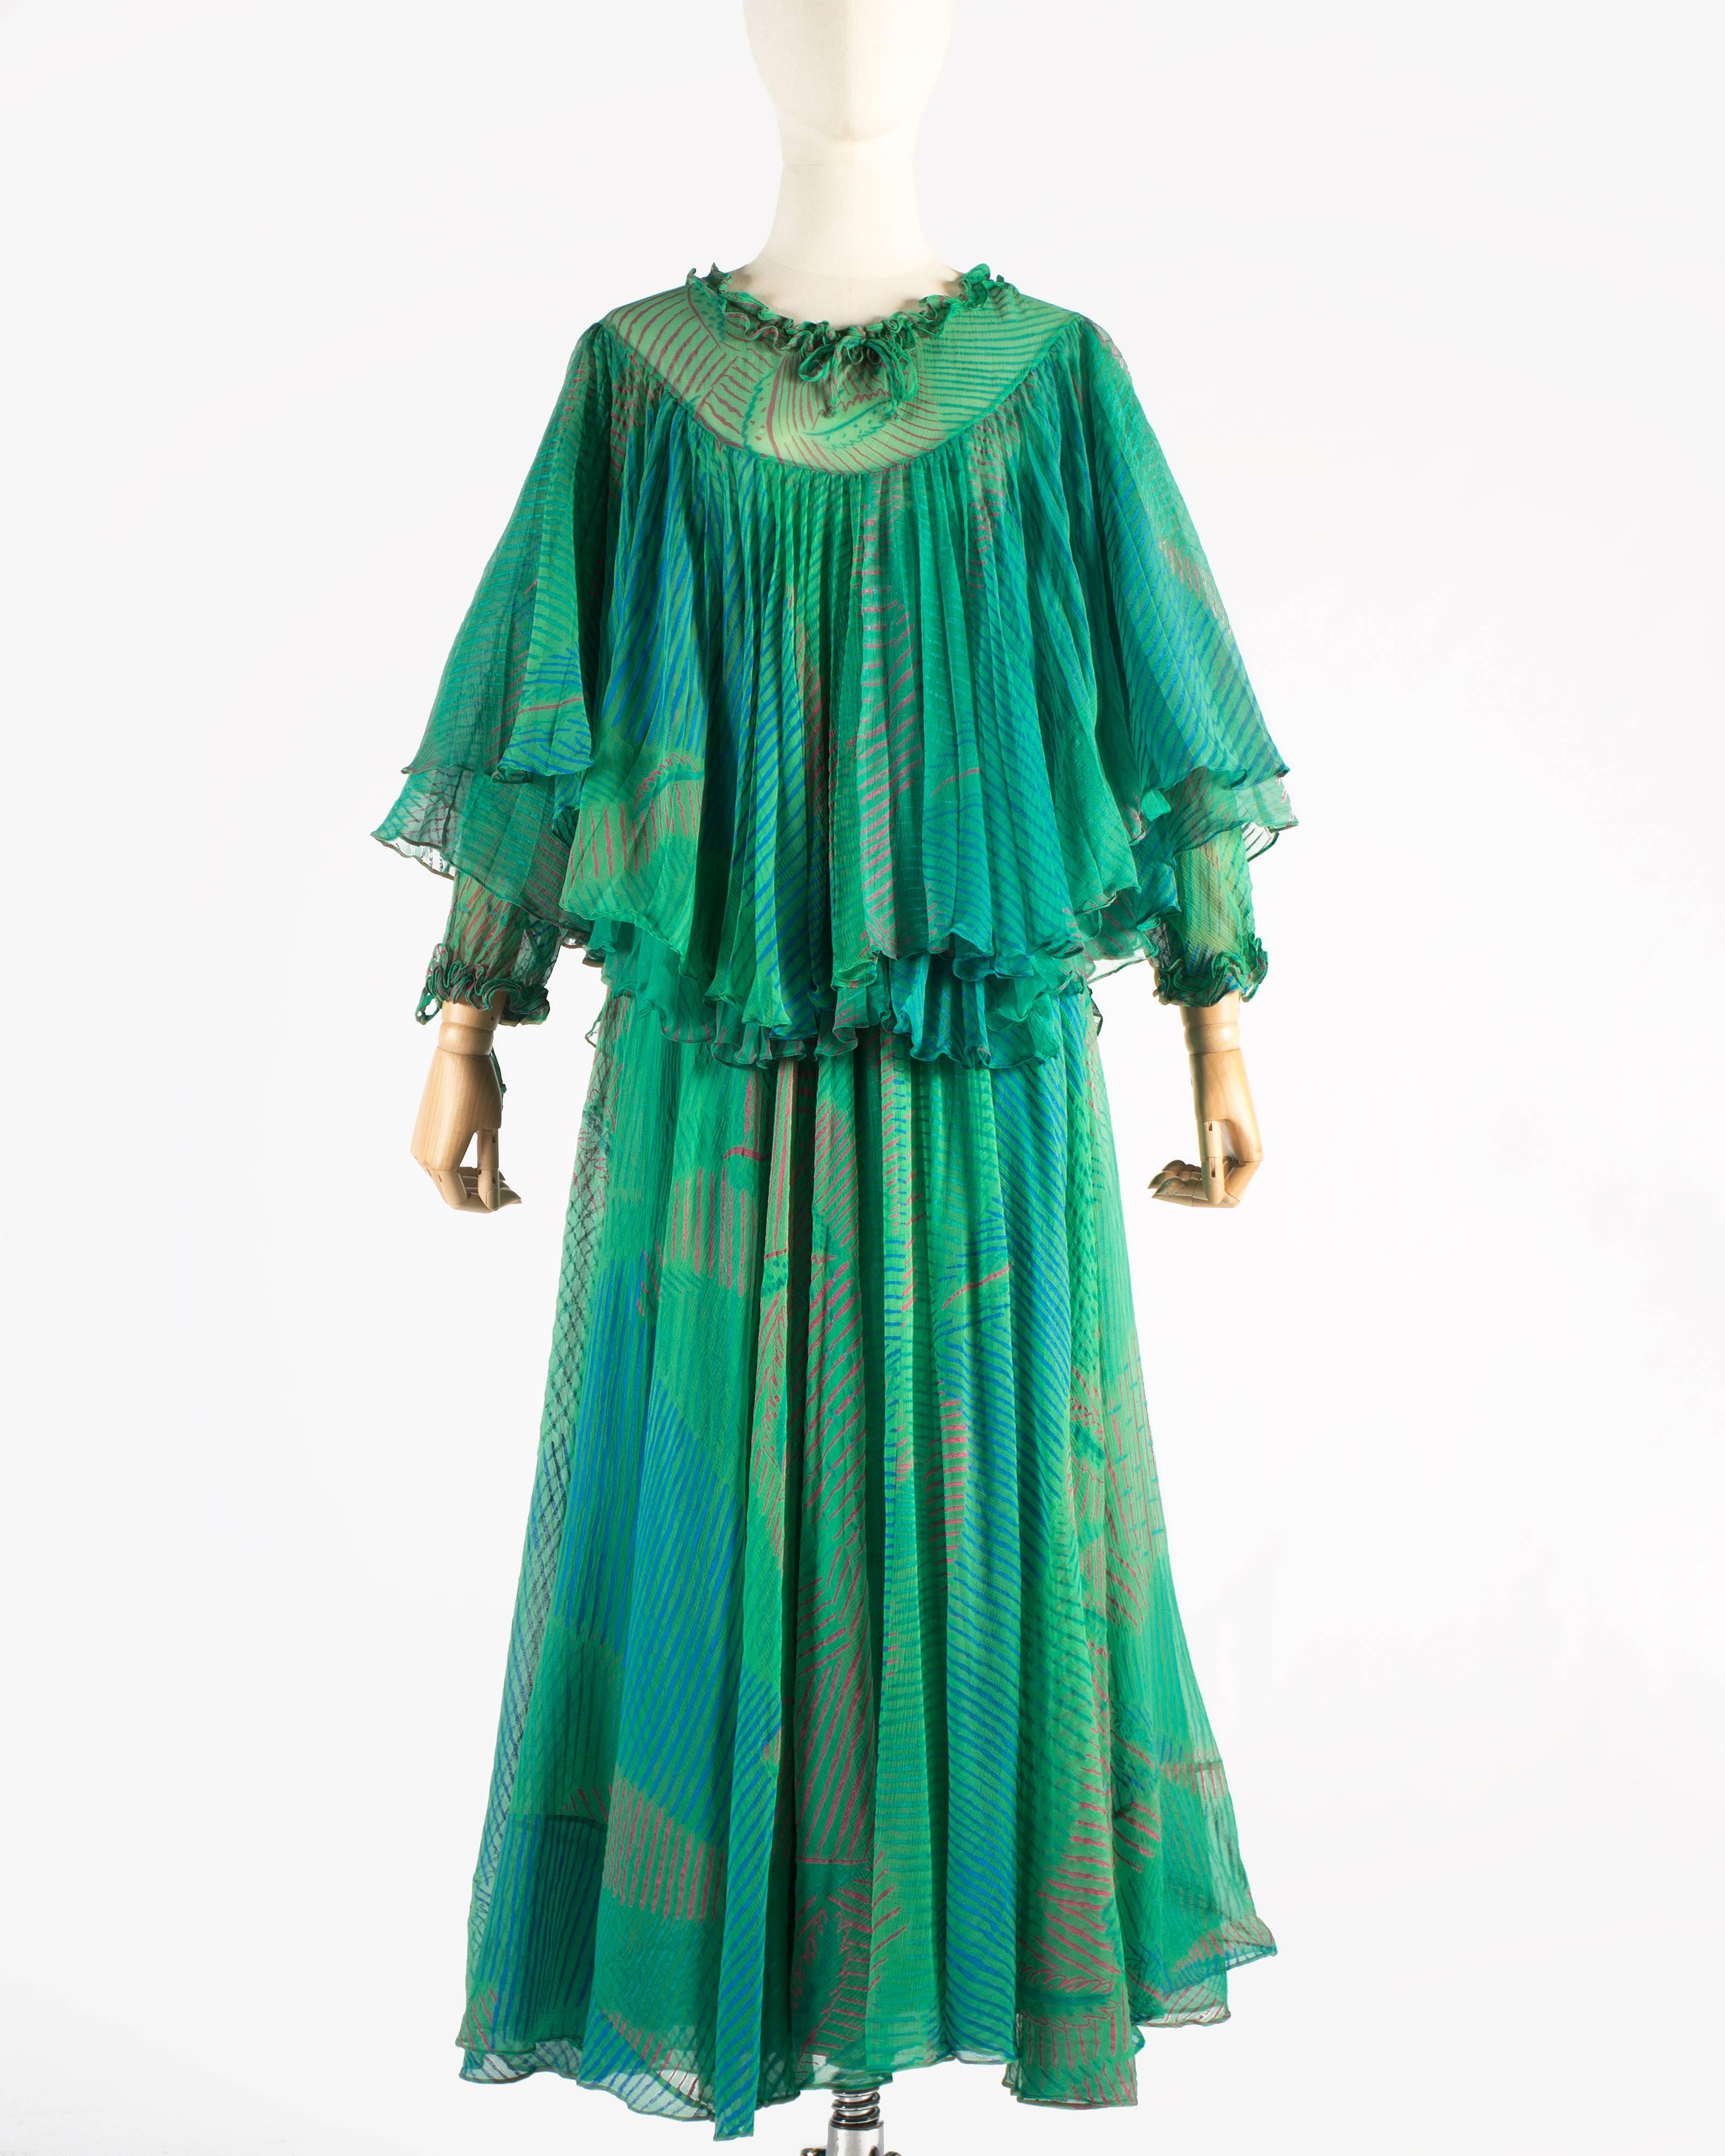 Green Ossie Clark green silk evening dress with print by Celia Birtwell, c. 1976